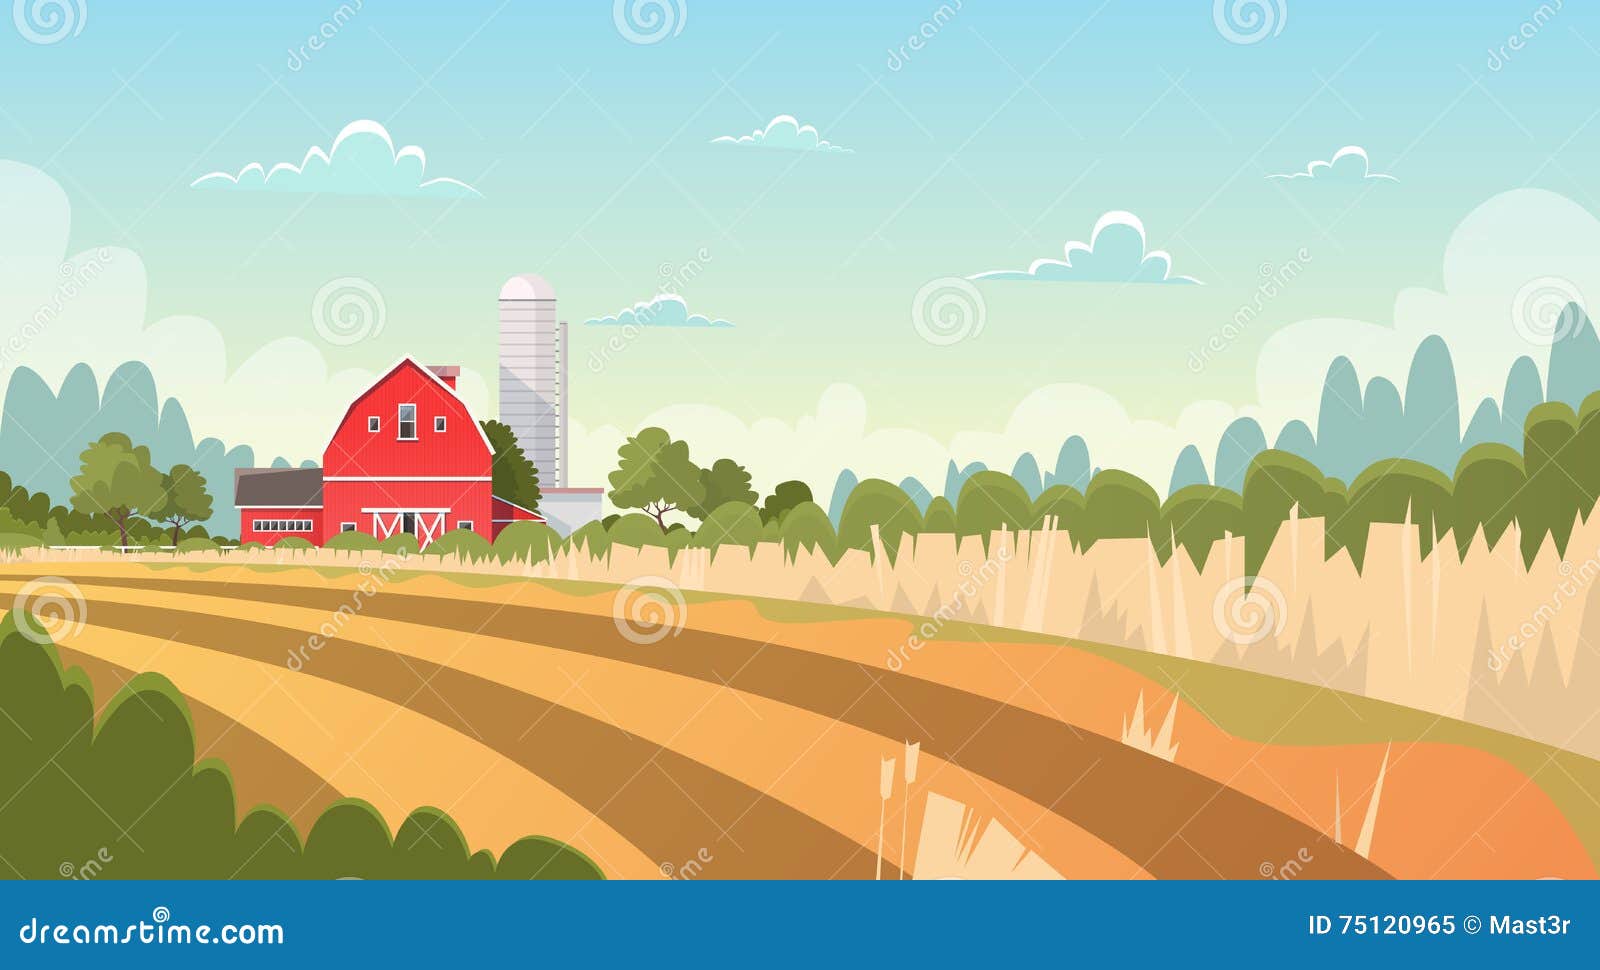 agriculture and farming, farmland countryside landscape